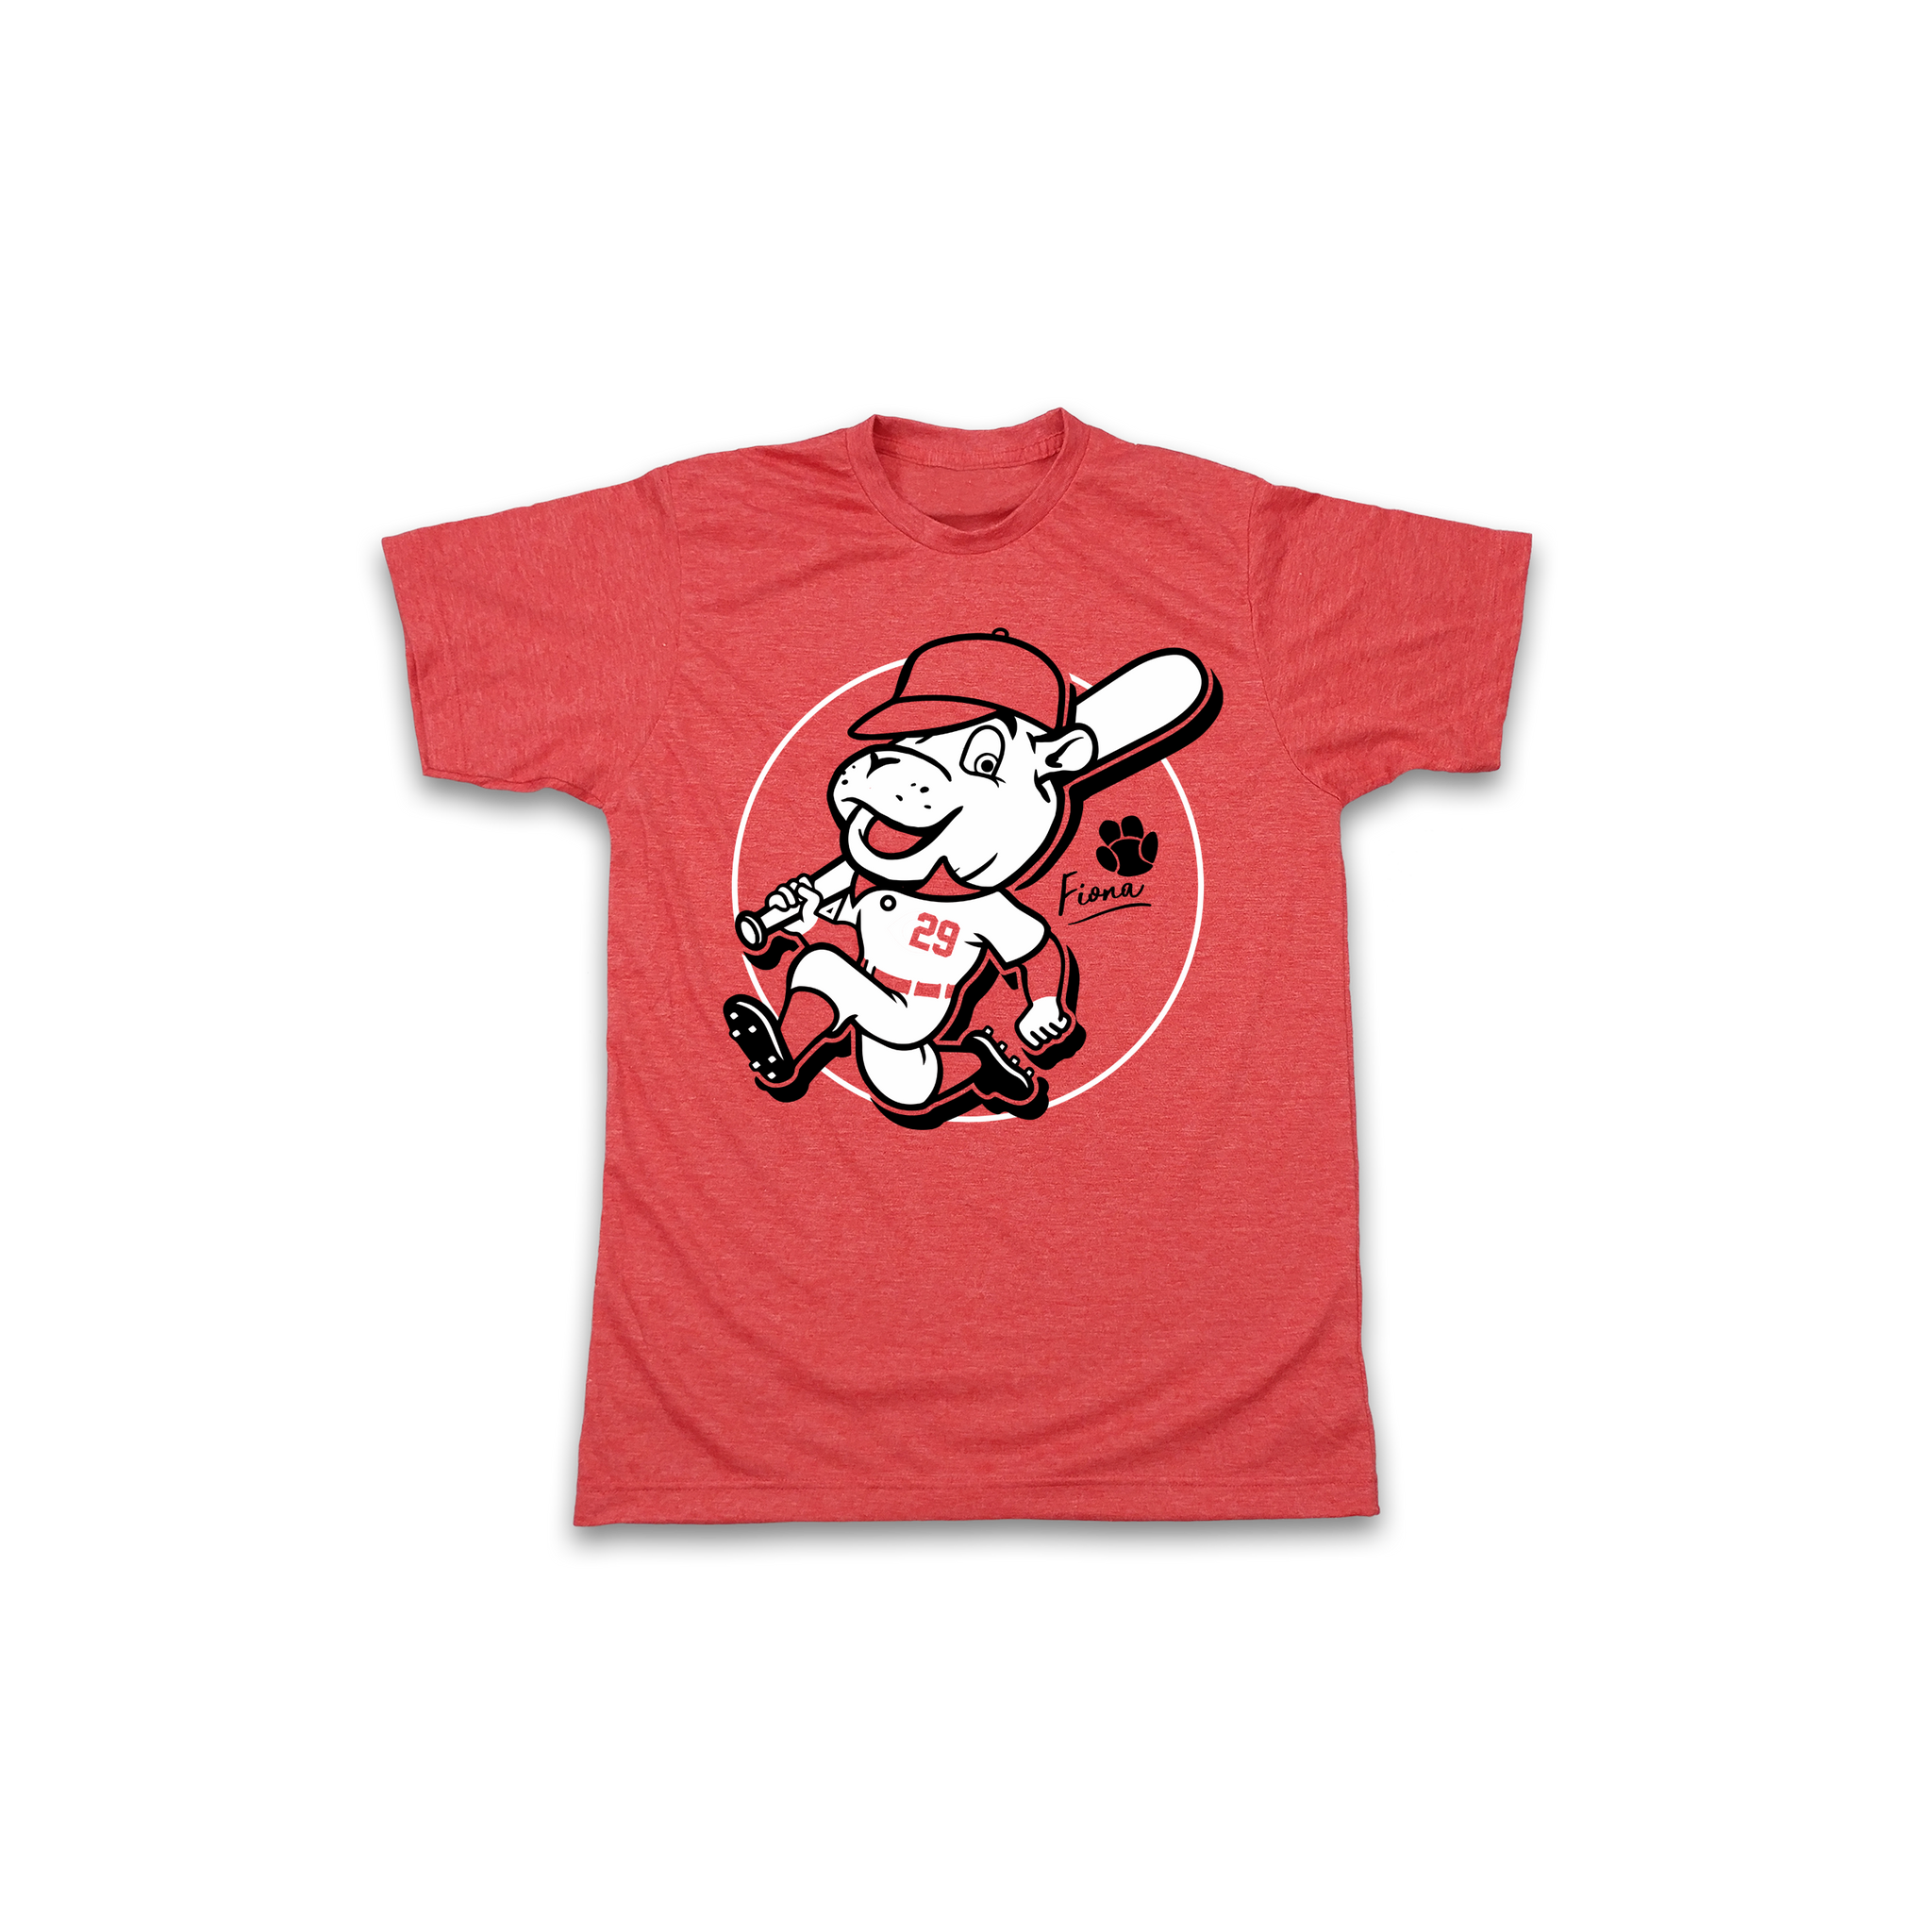 baseball player shirts